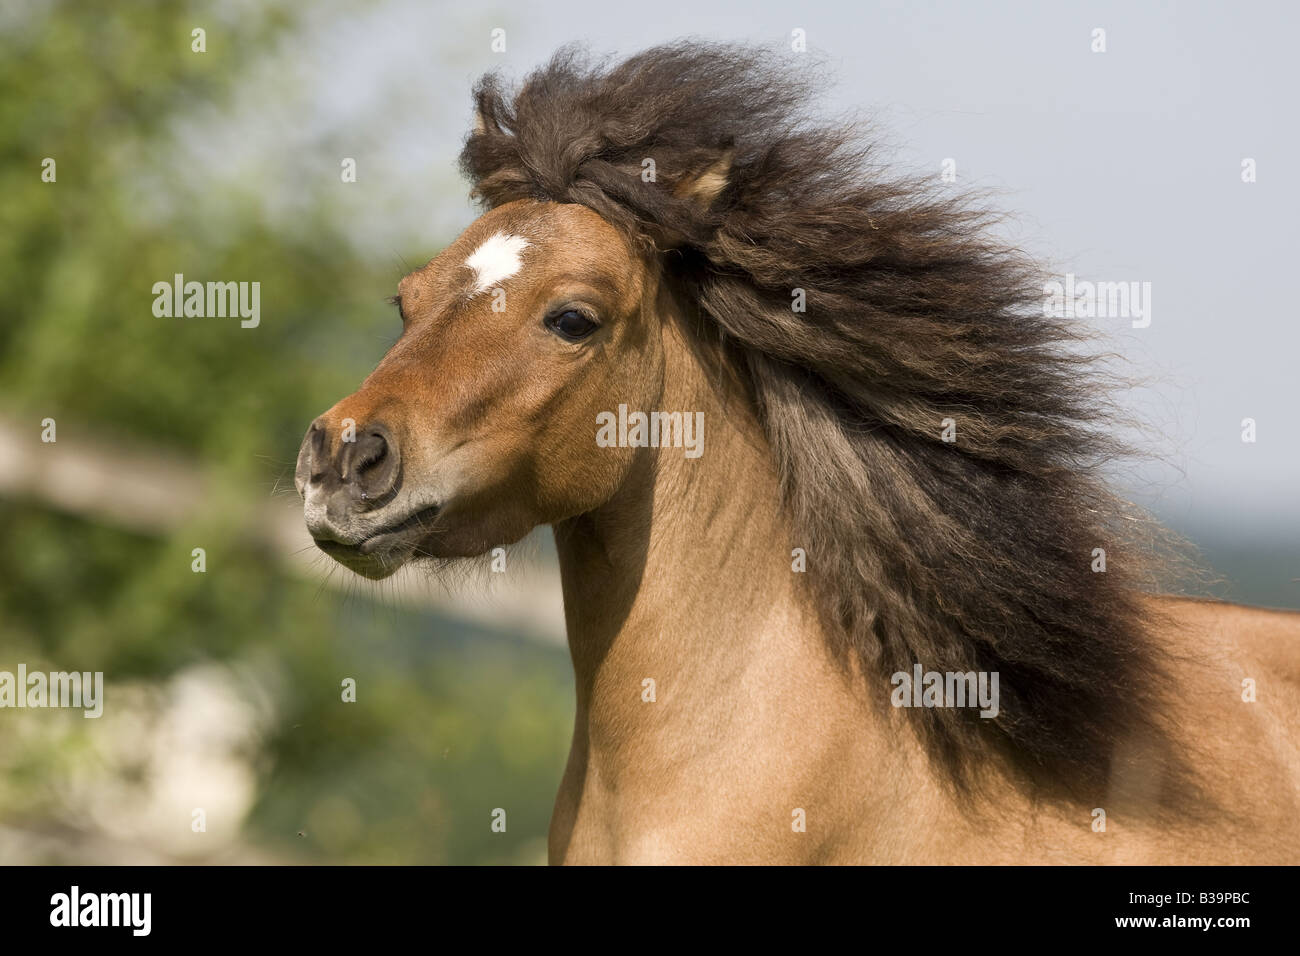 American Miniature Horse - Portrait Stock Photo